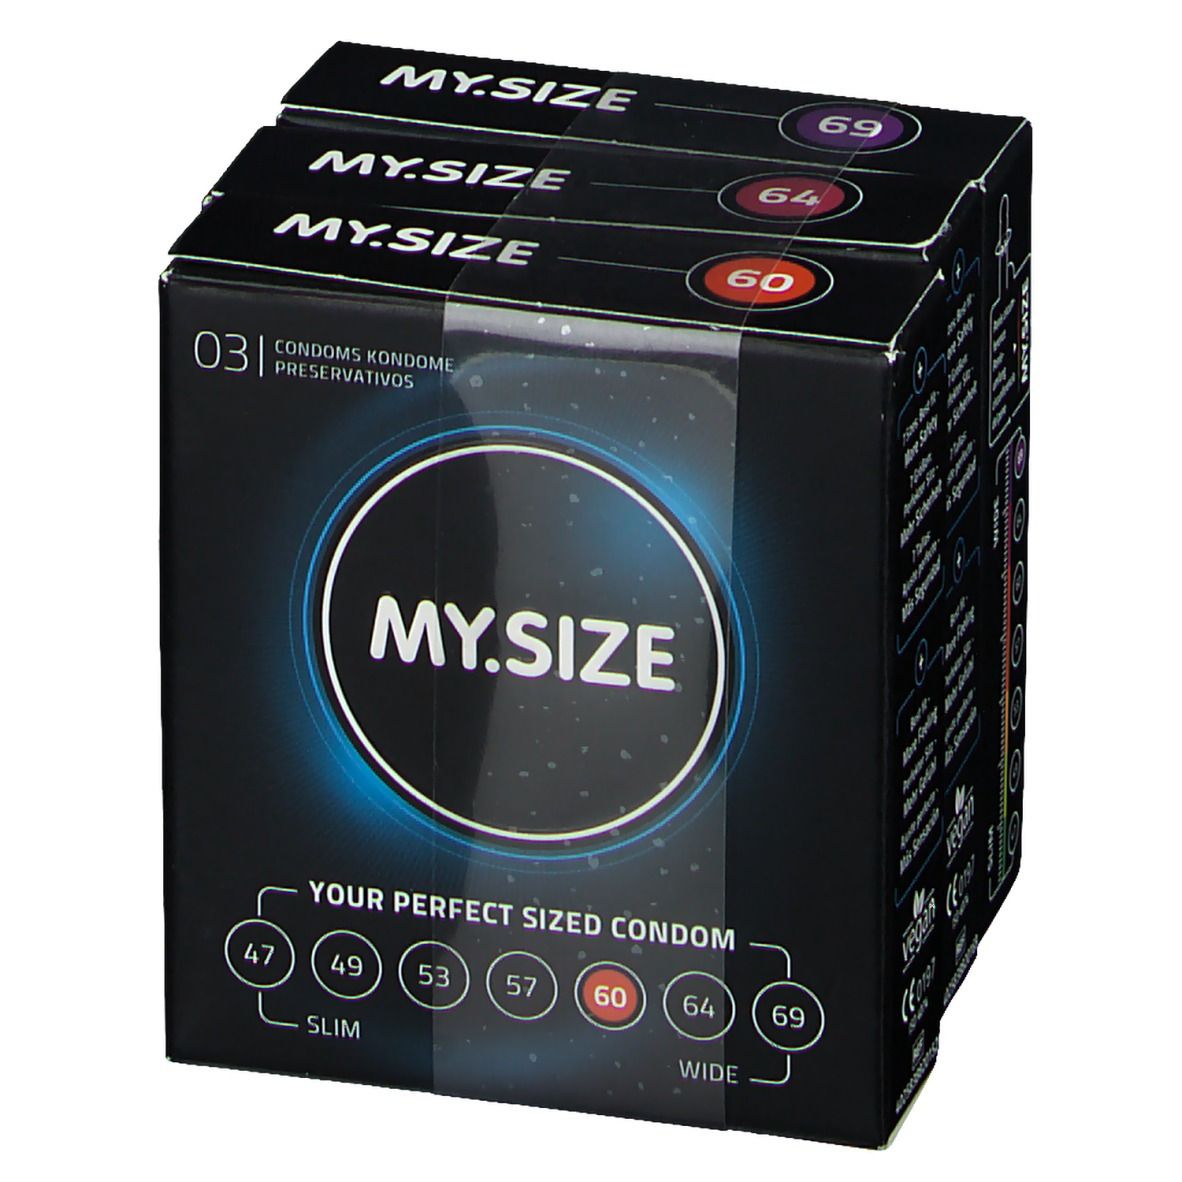 MY.SIZE 60 64 69 Kondome Testpack